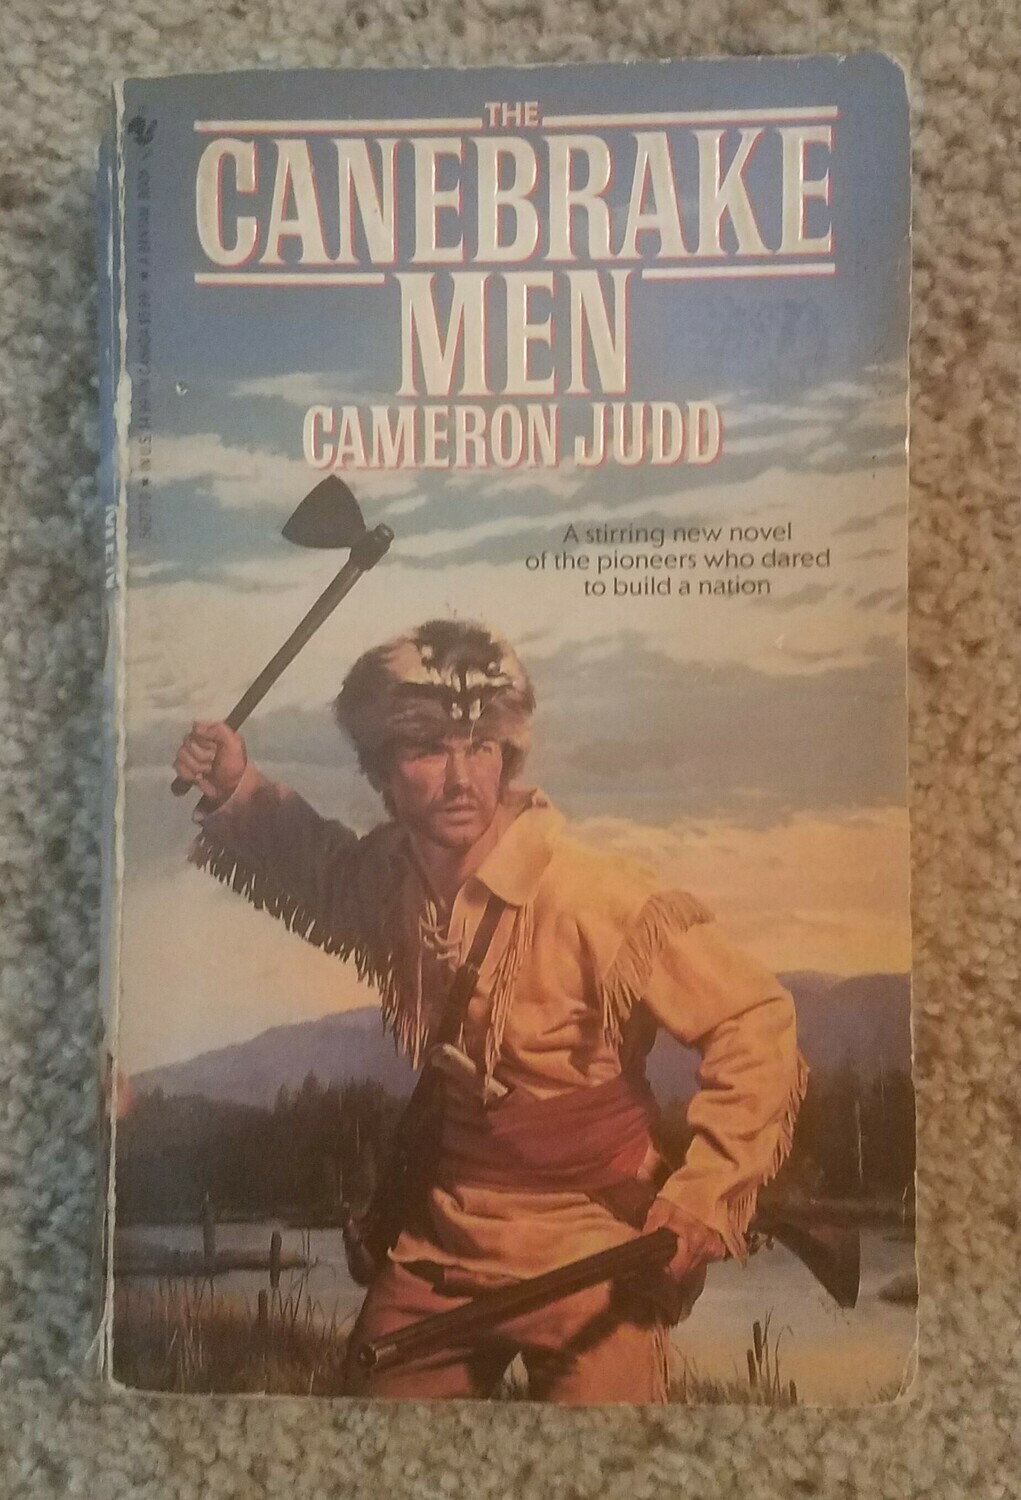 The Canebrake Men by Cameron Judd